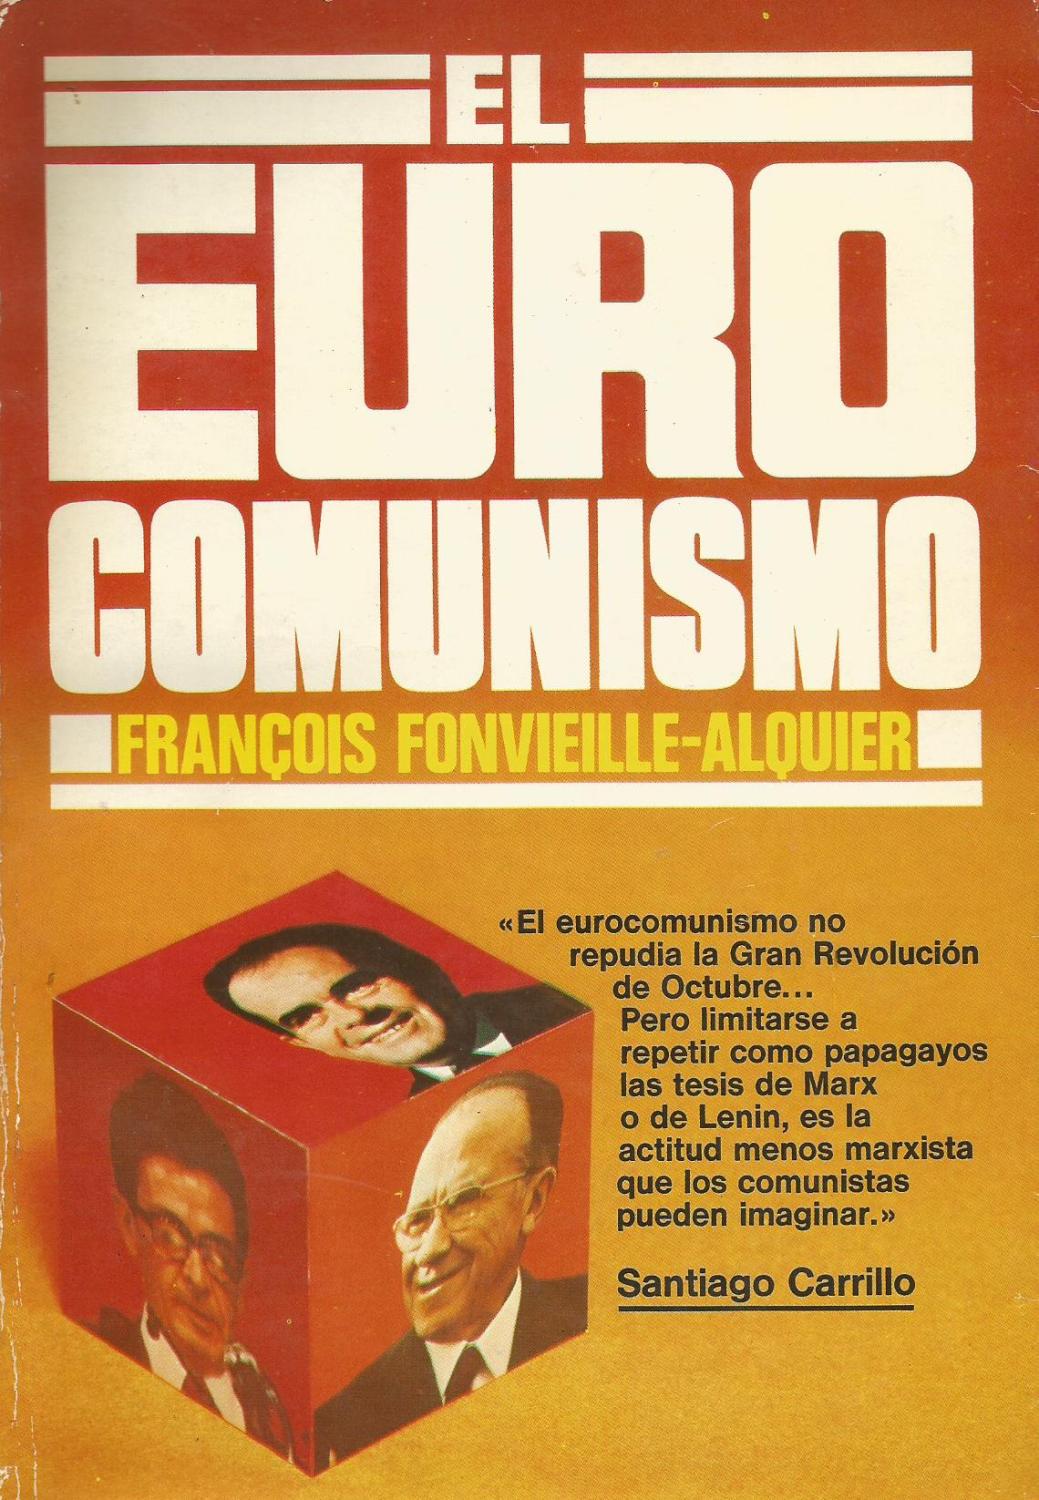 El Eurocomunismo - François Fonvieille-Alquier